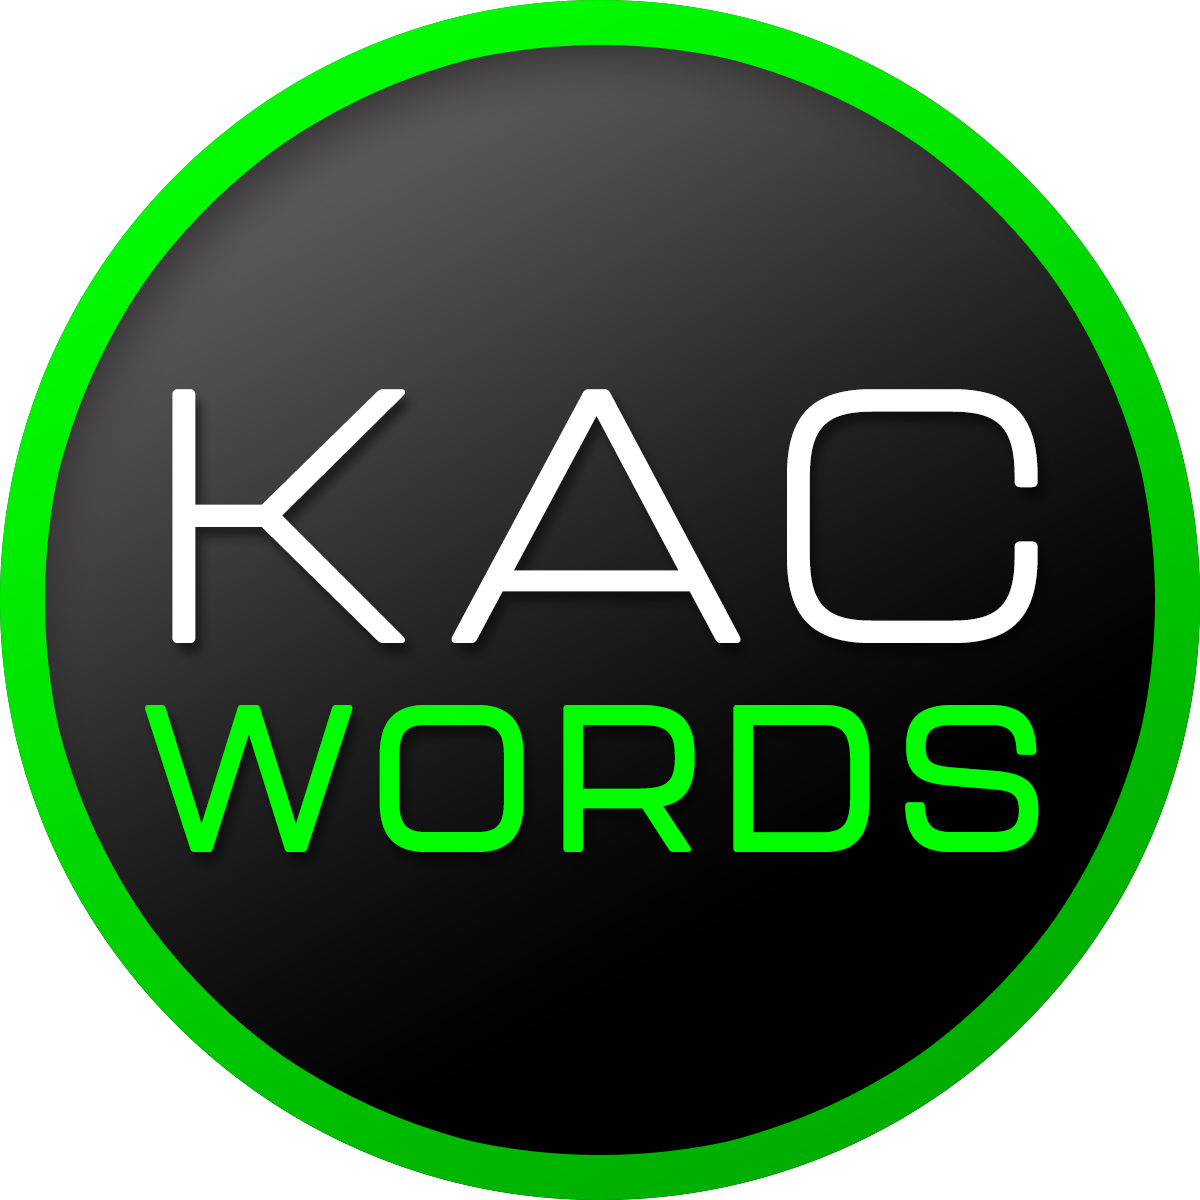 KAC Words